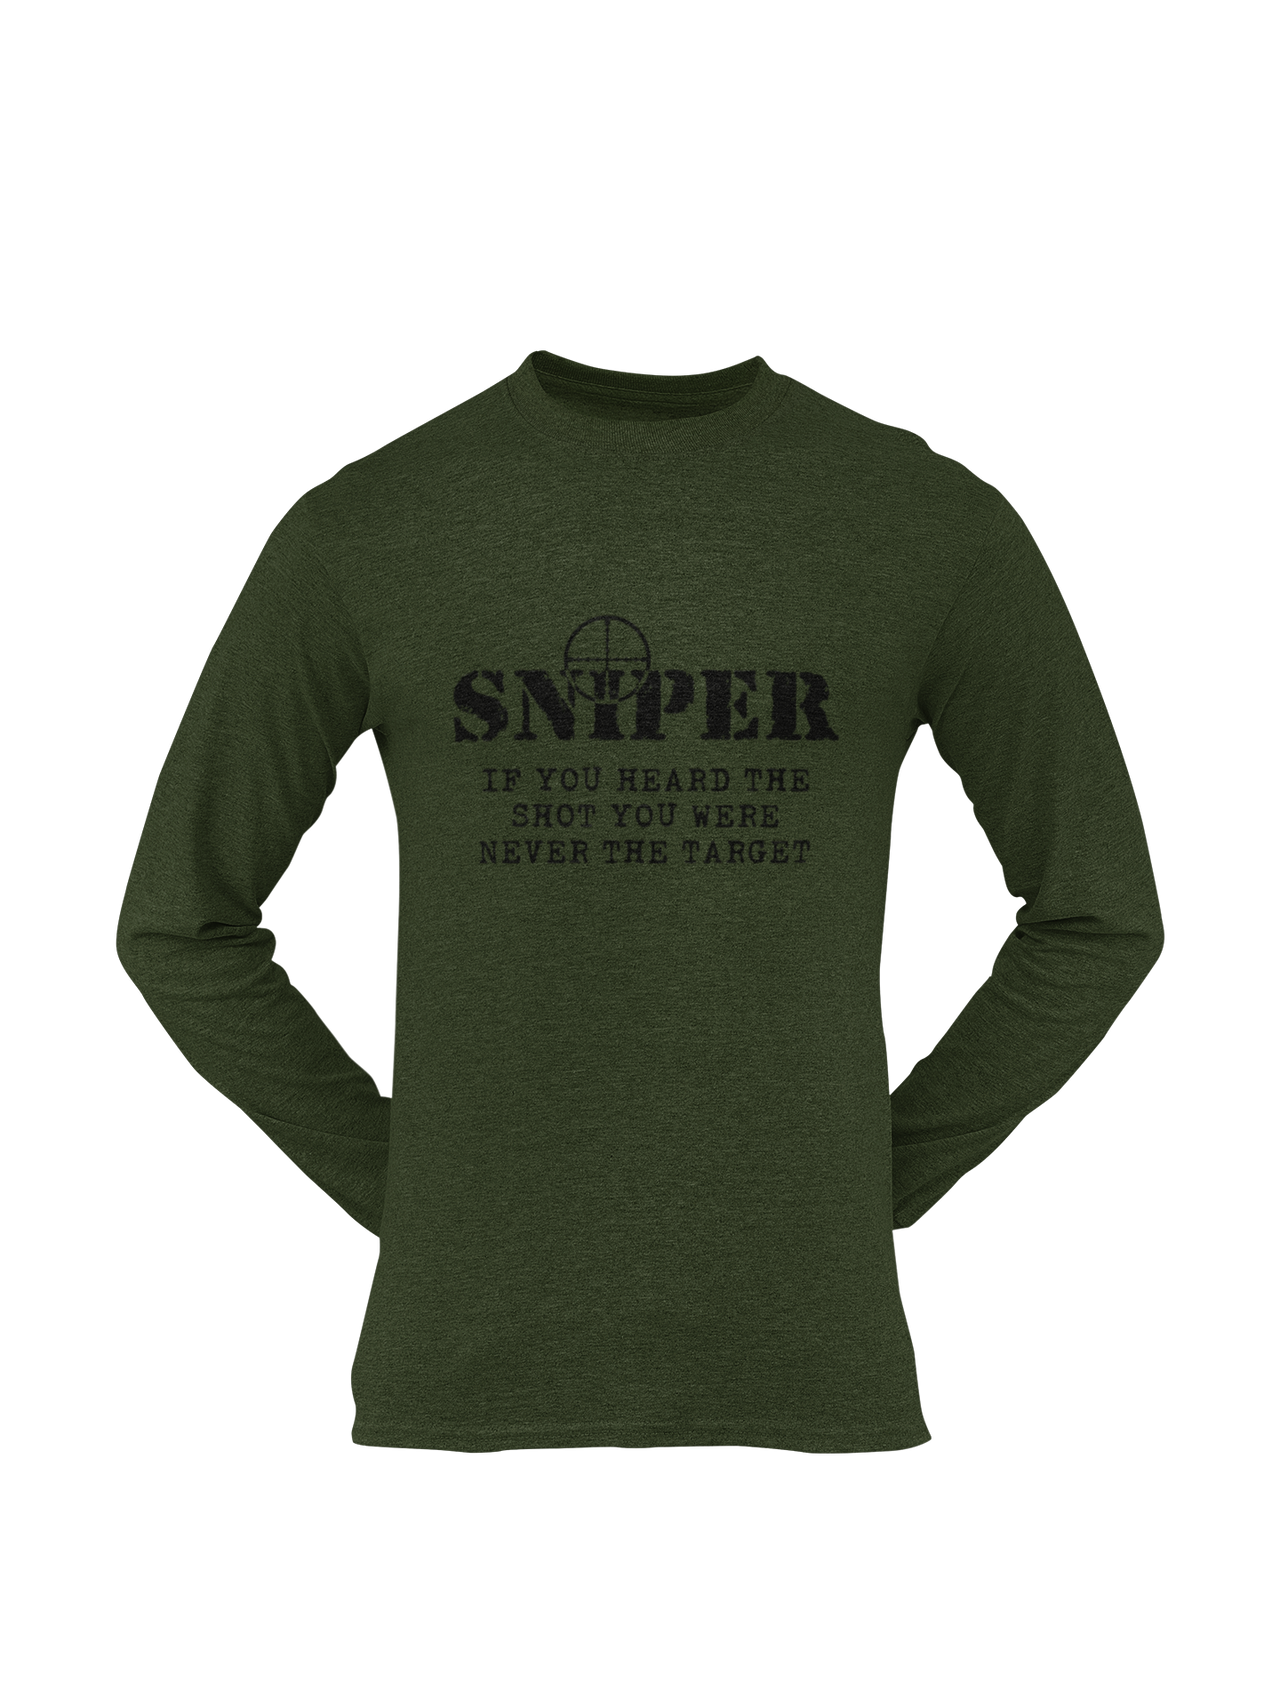 Sniper T-shirt - Sniper, If You Heard The Shot..... (Men)